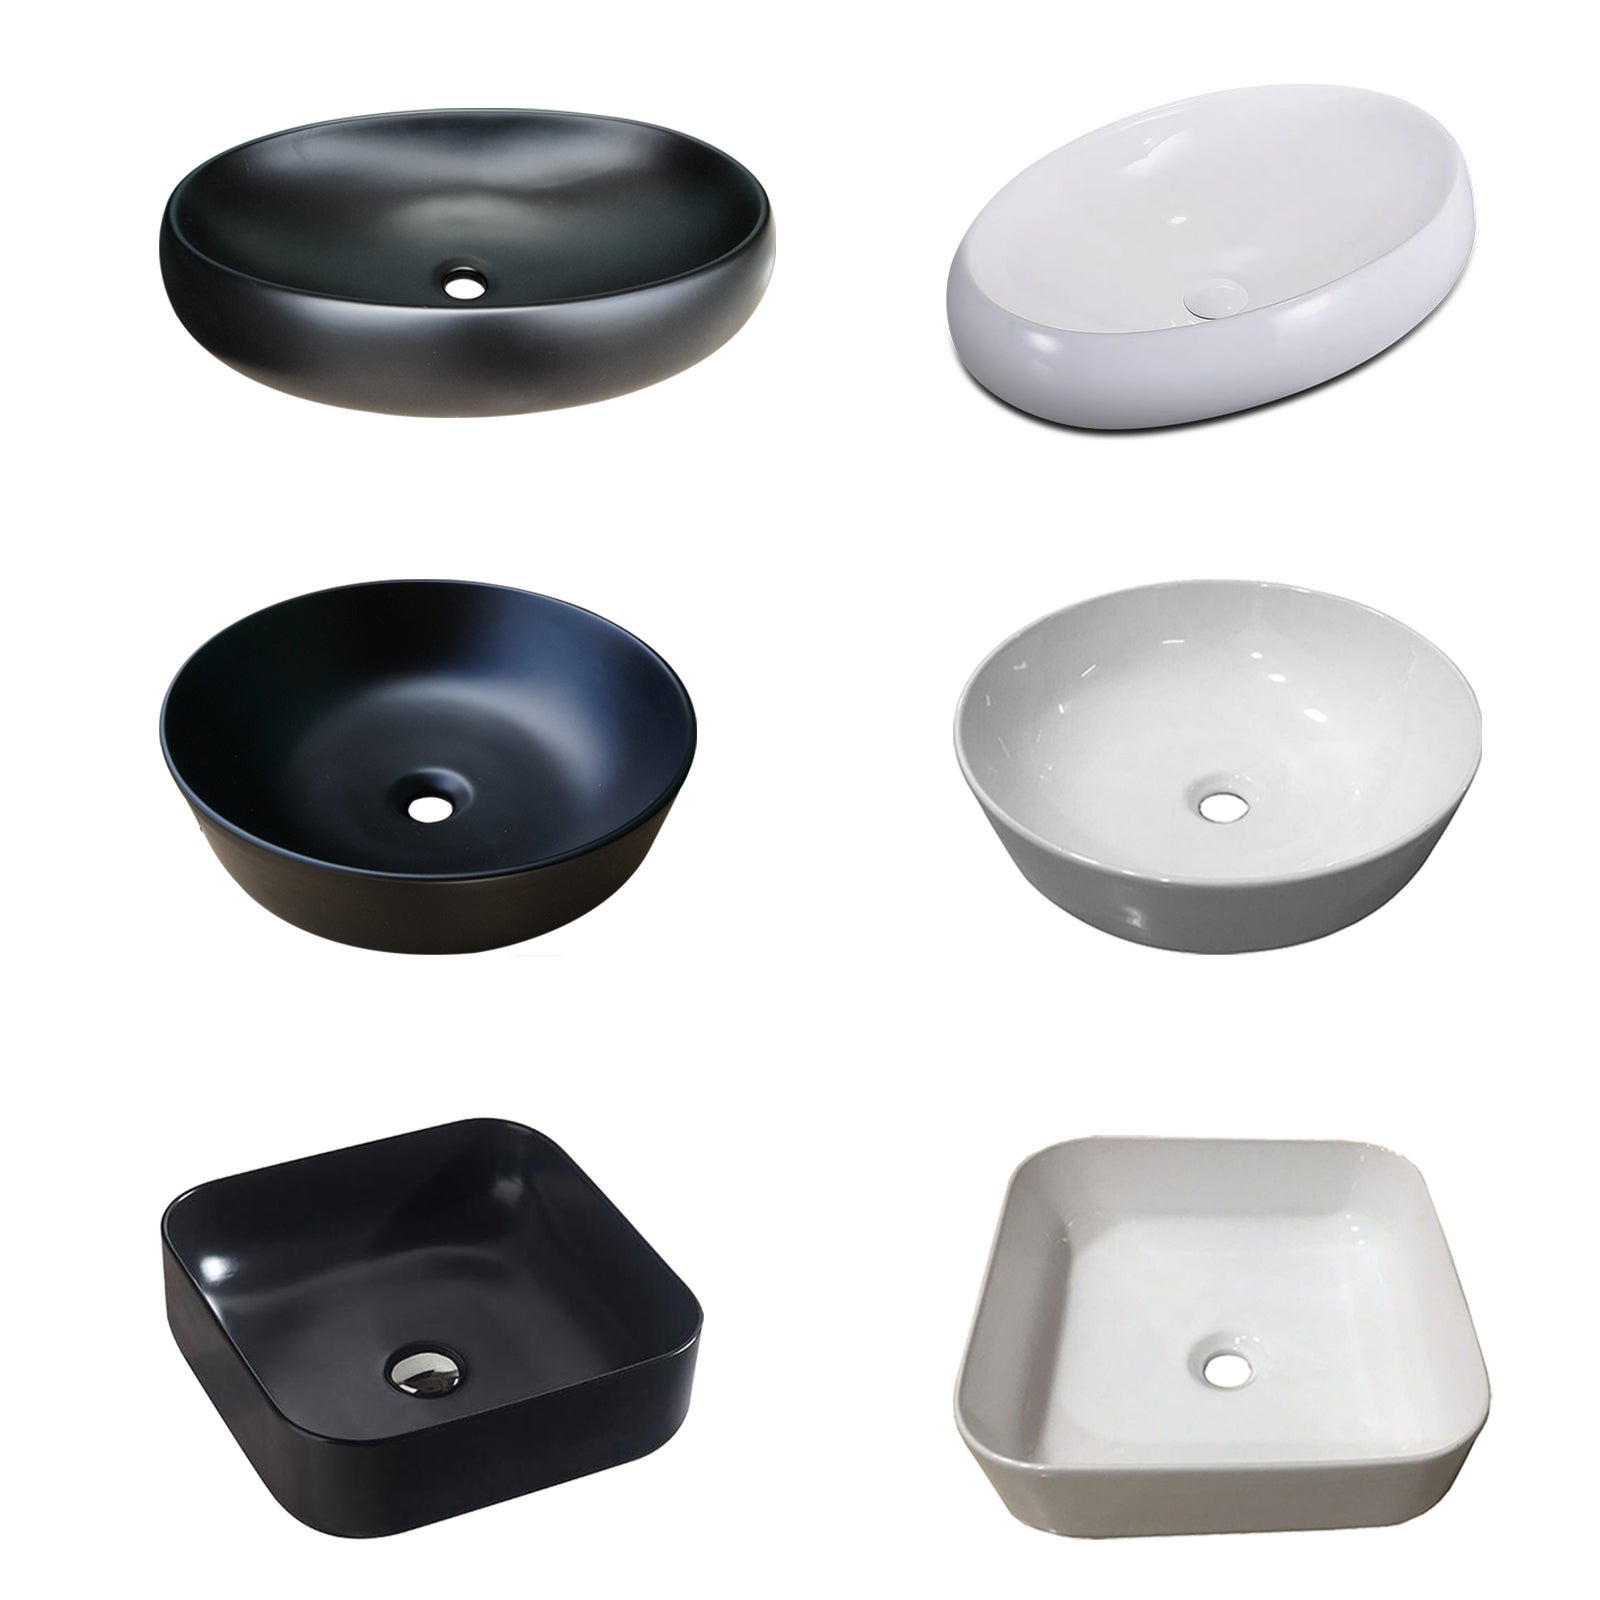 ACA Bathroom Ceramic Wash Basin Vanity Sink Bowl Round Oval Square Counter Top Gloss White Black